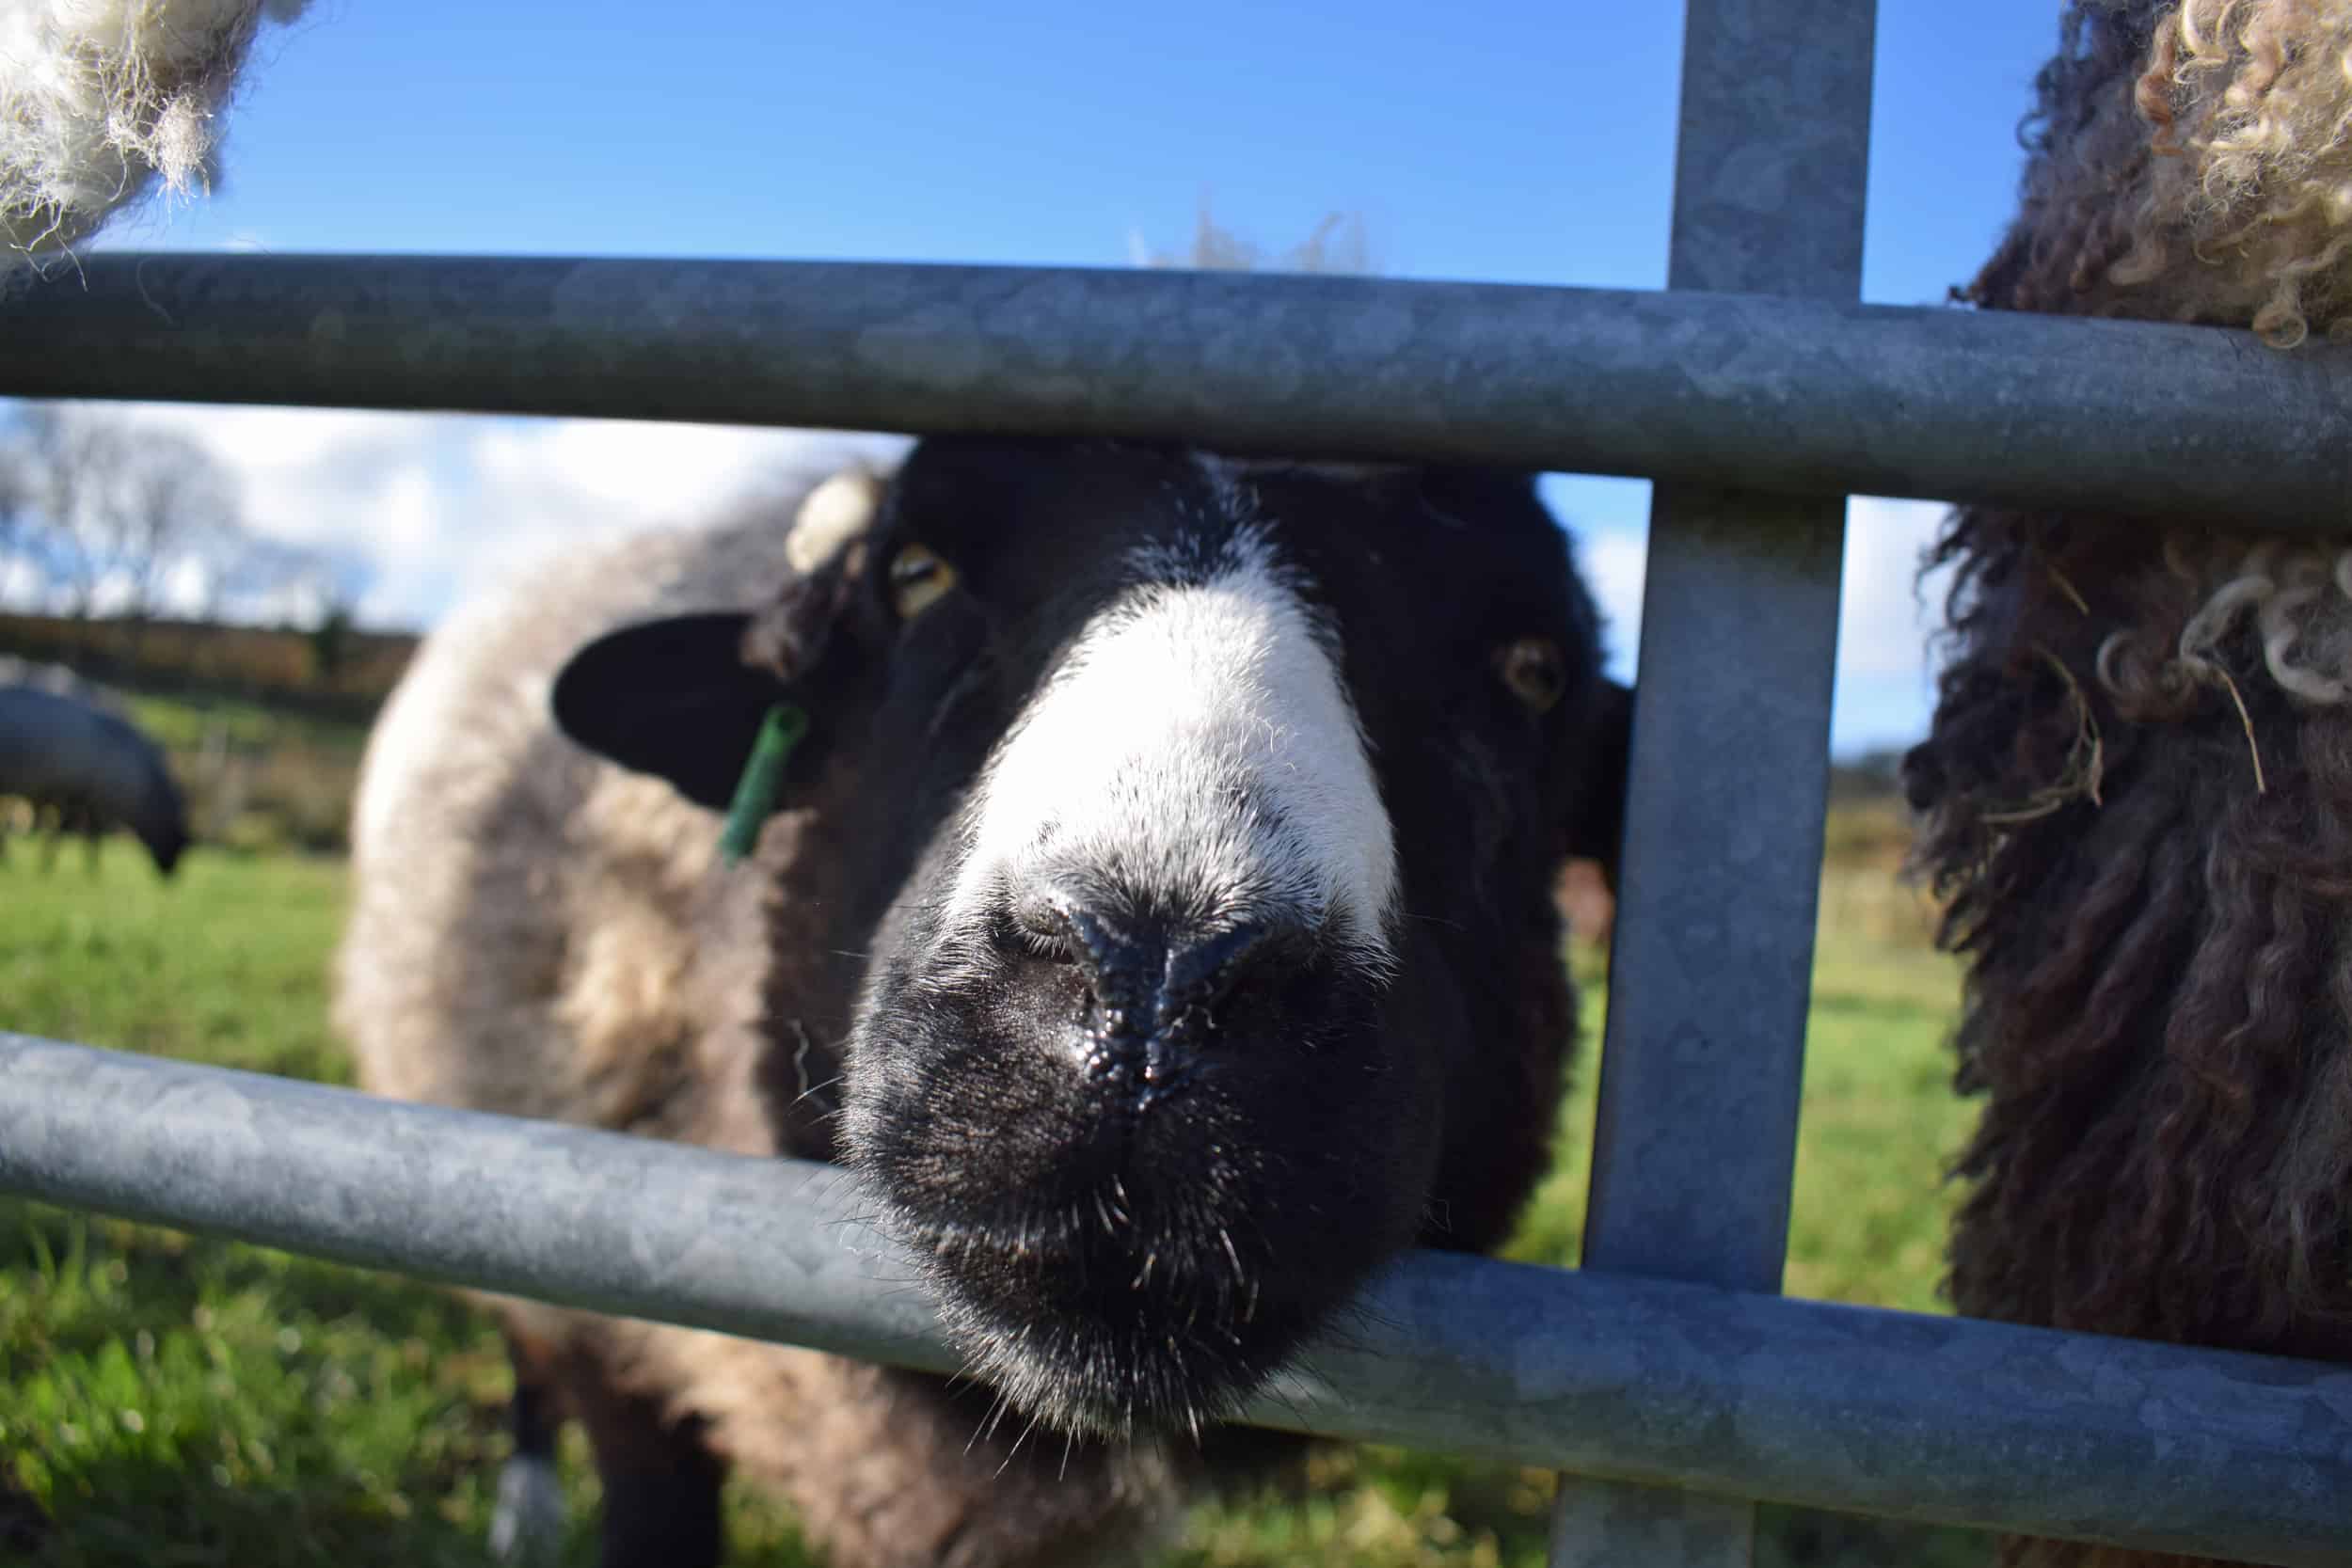 Holly feed me pet lamb sheep jacob cross shetland spotted black grey white wales gwynedd british wool gifts homeware